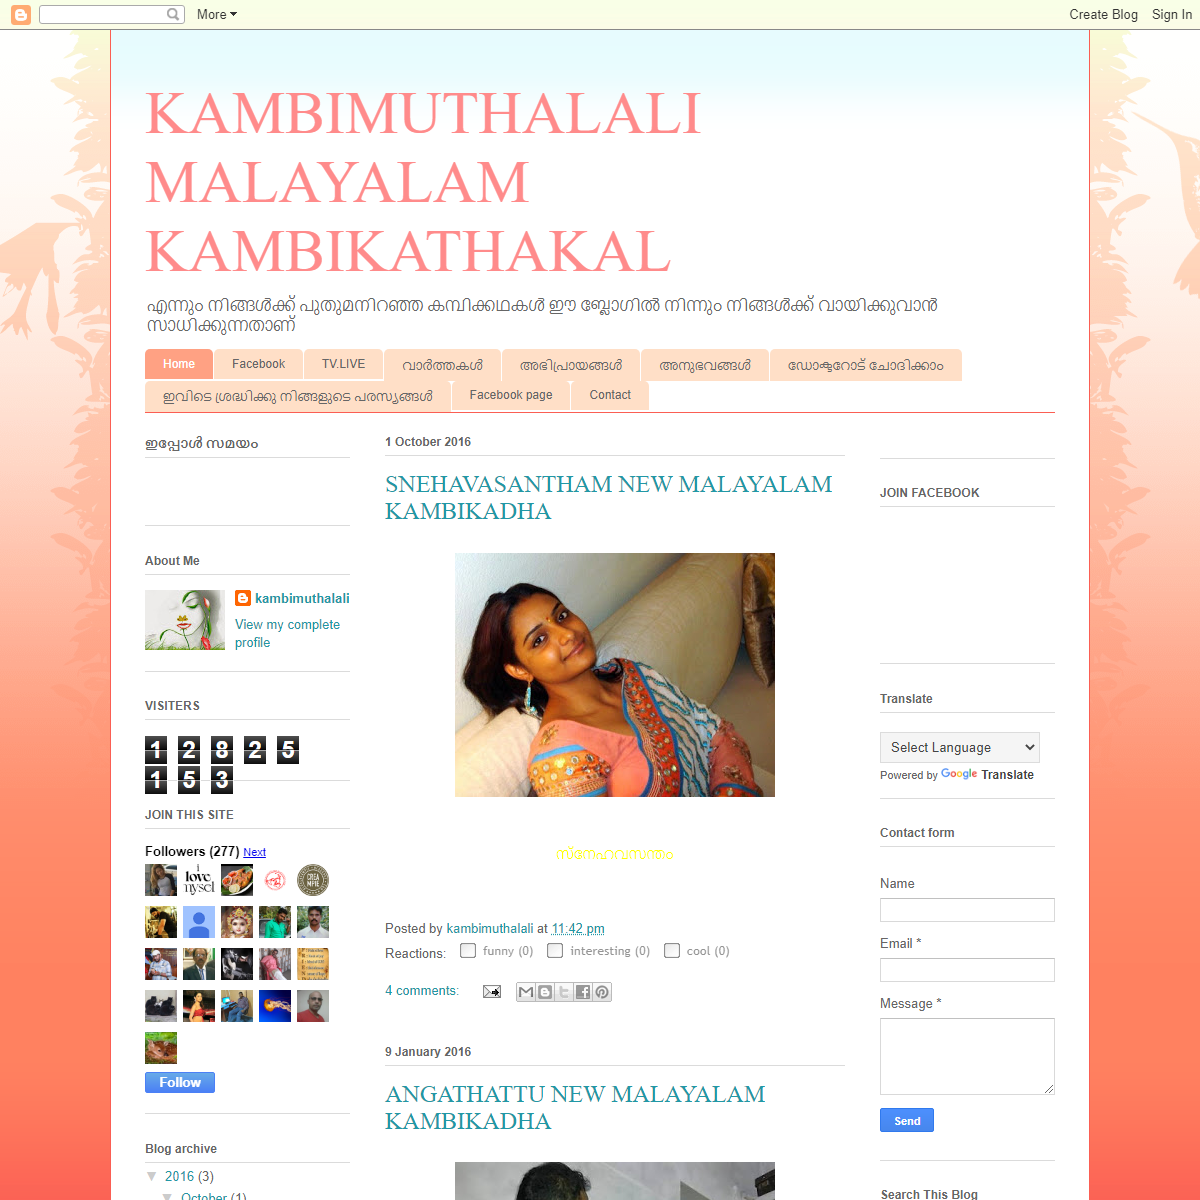 A complete backup of https://kambimuthalali.blogspot.com/